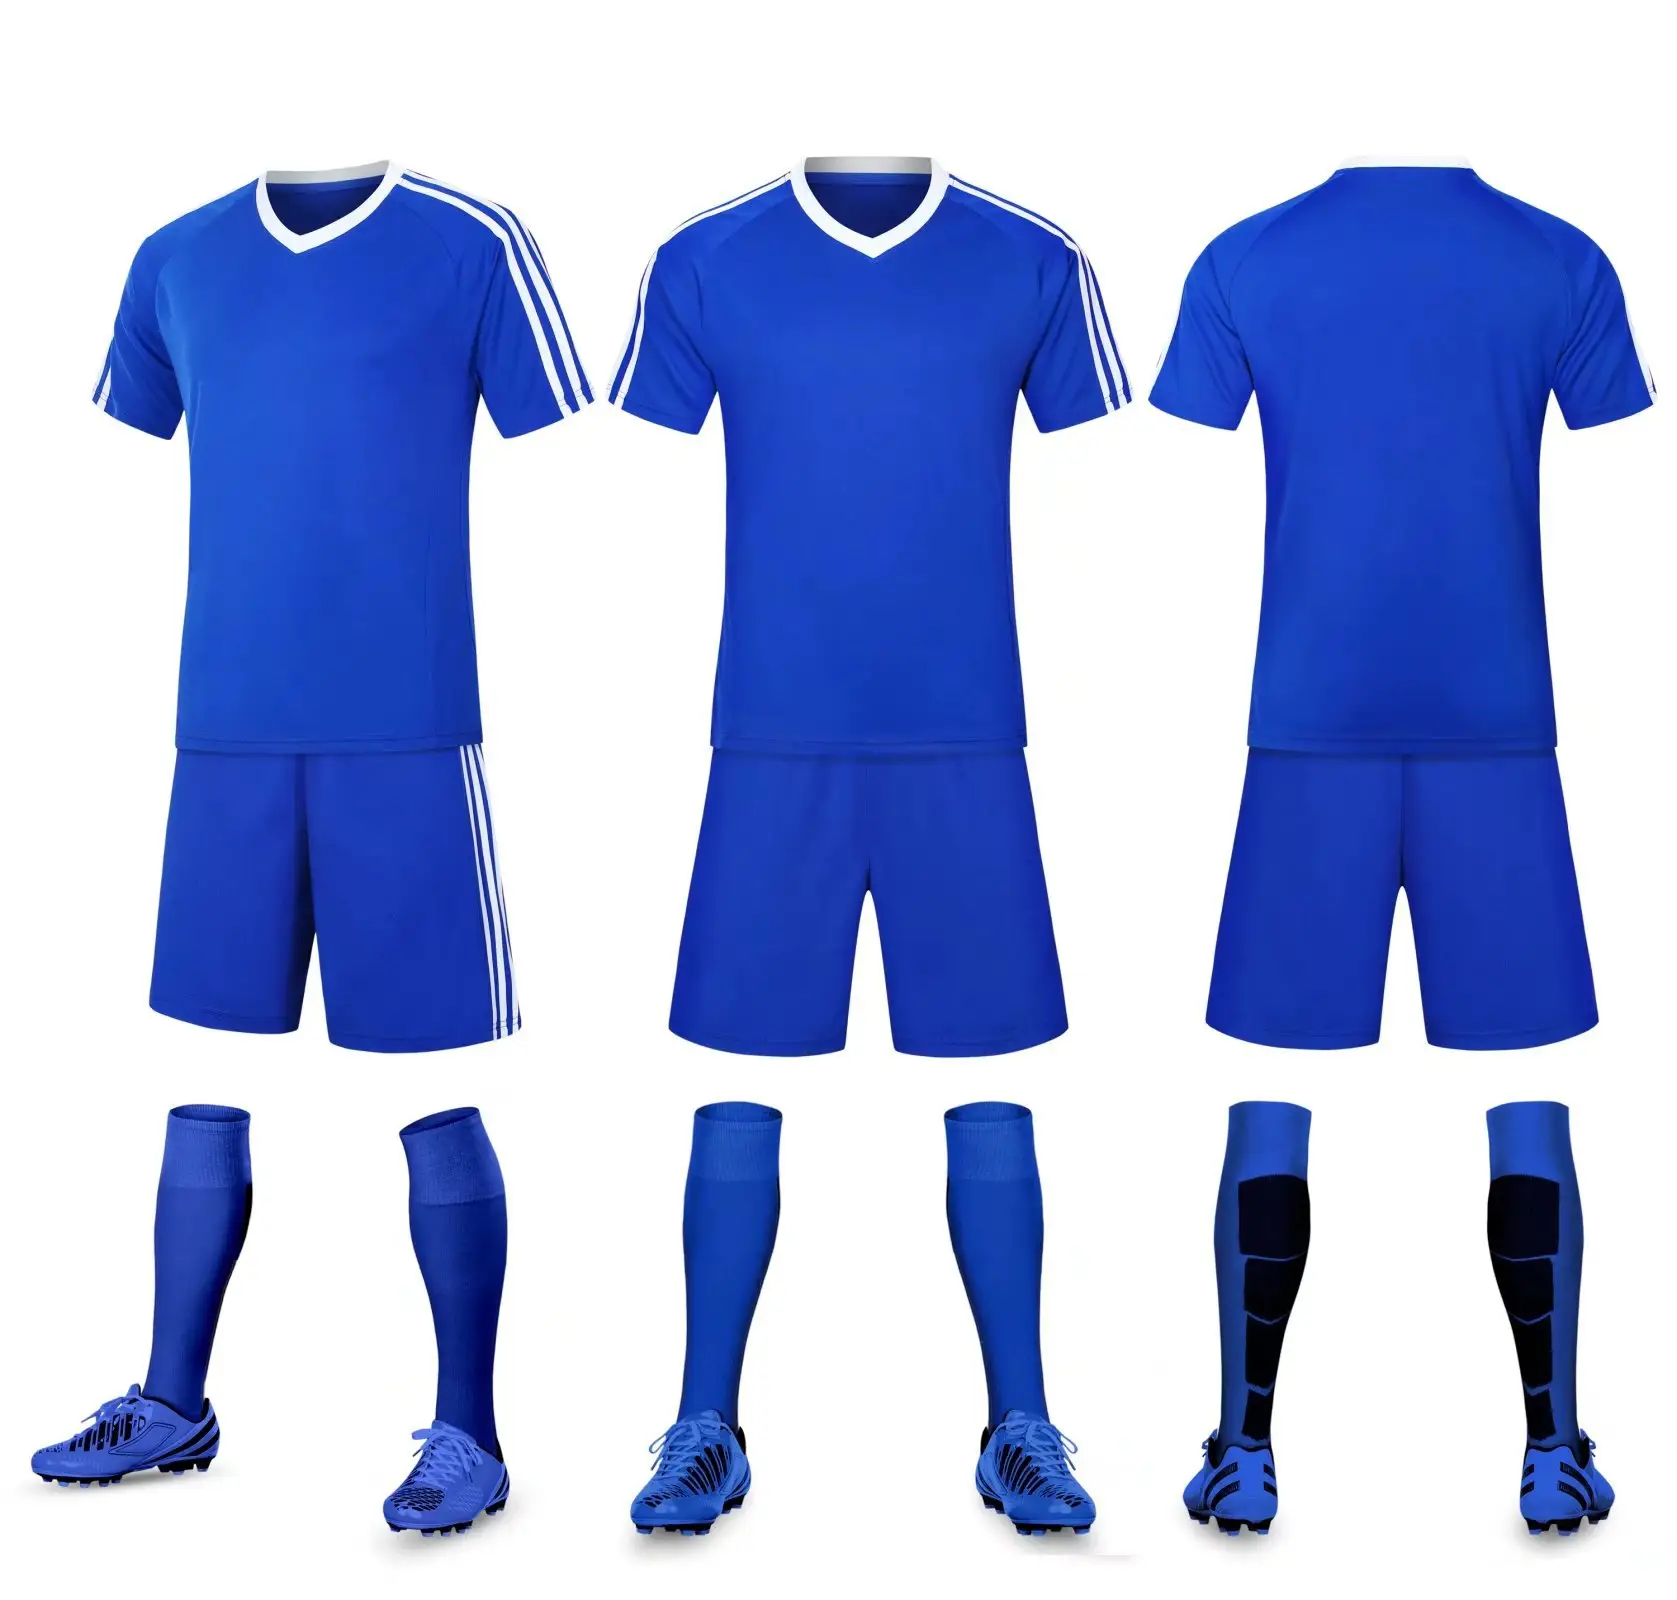 Custom soccer tshirt retro football shirts jersey blue plus sizes oem logos 160 grams summer set